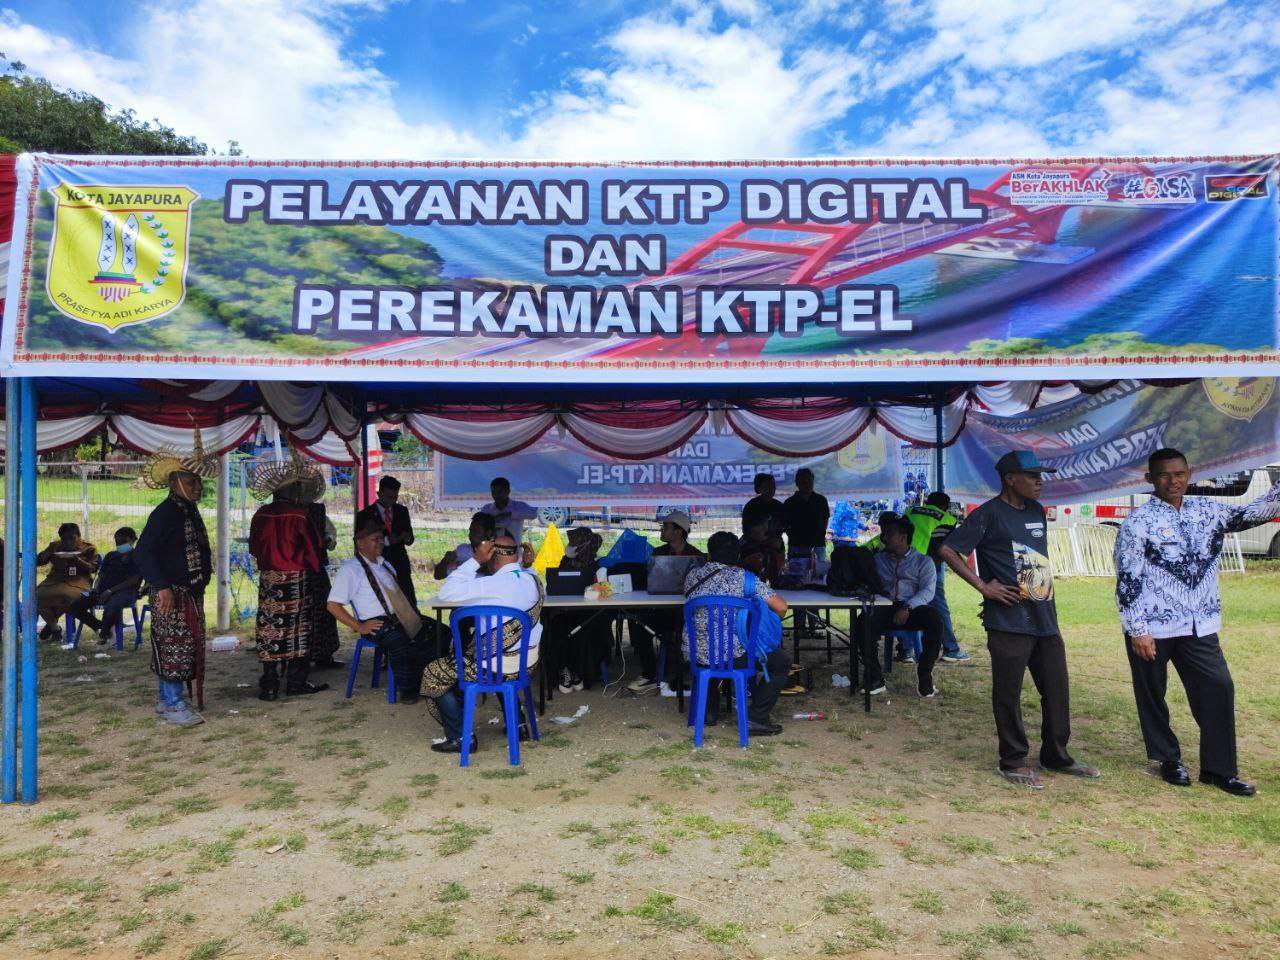 KTP digital